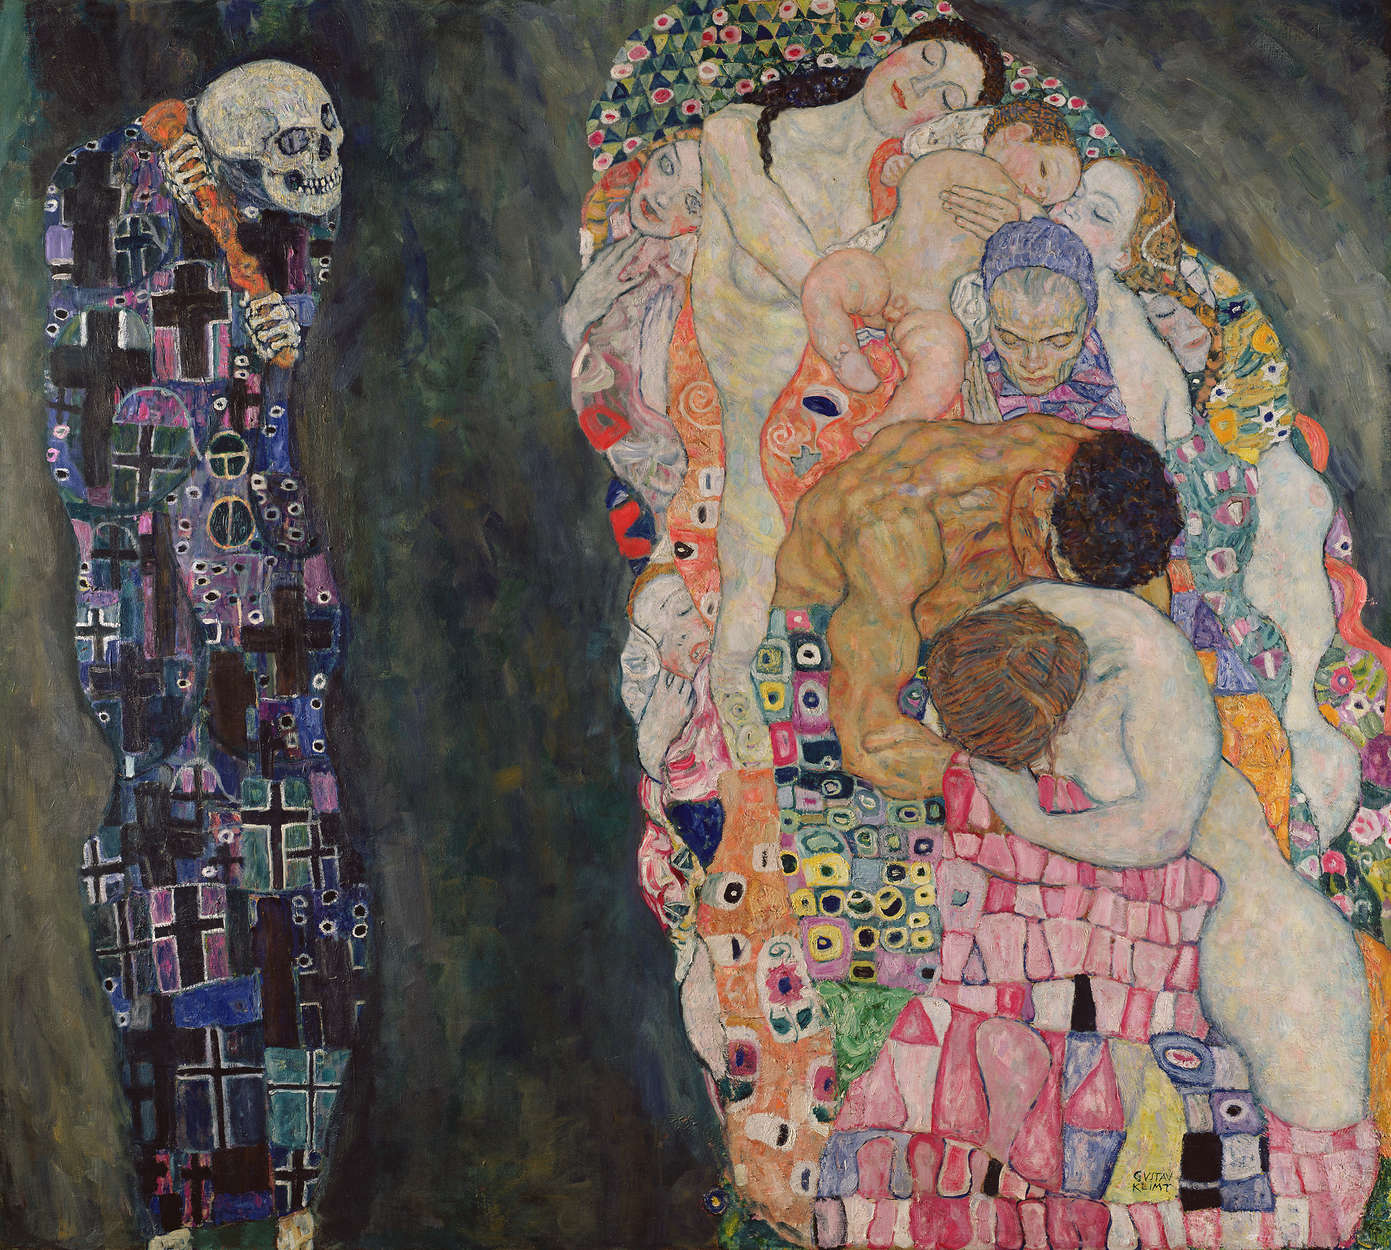             Photo wallpaper "Hygieia" by Gustav Klimt
        